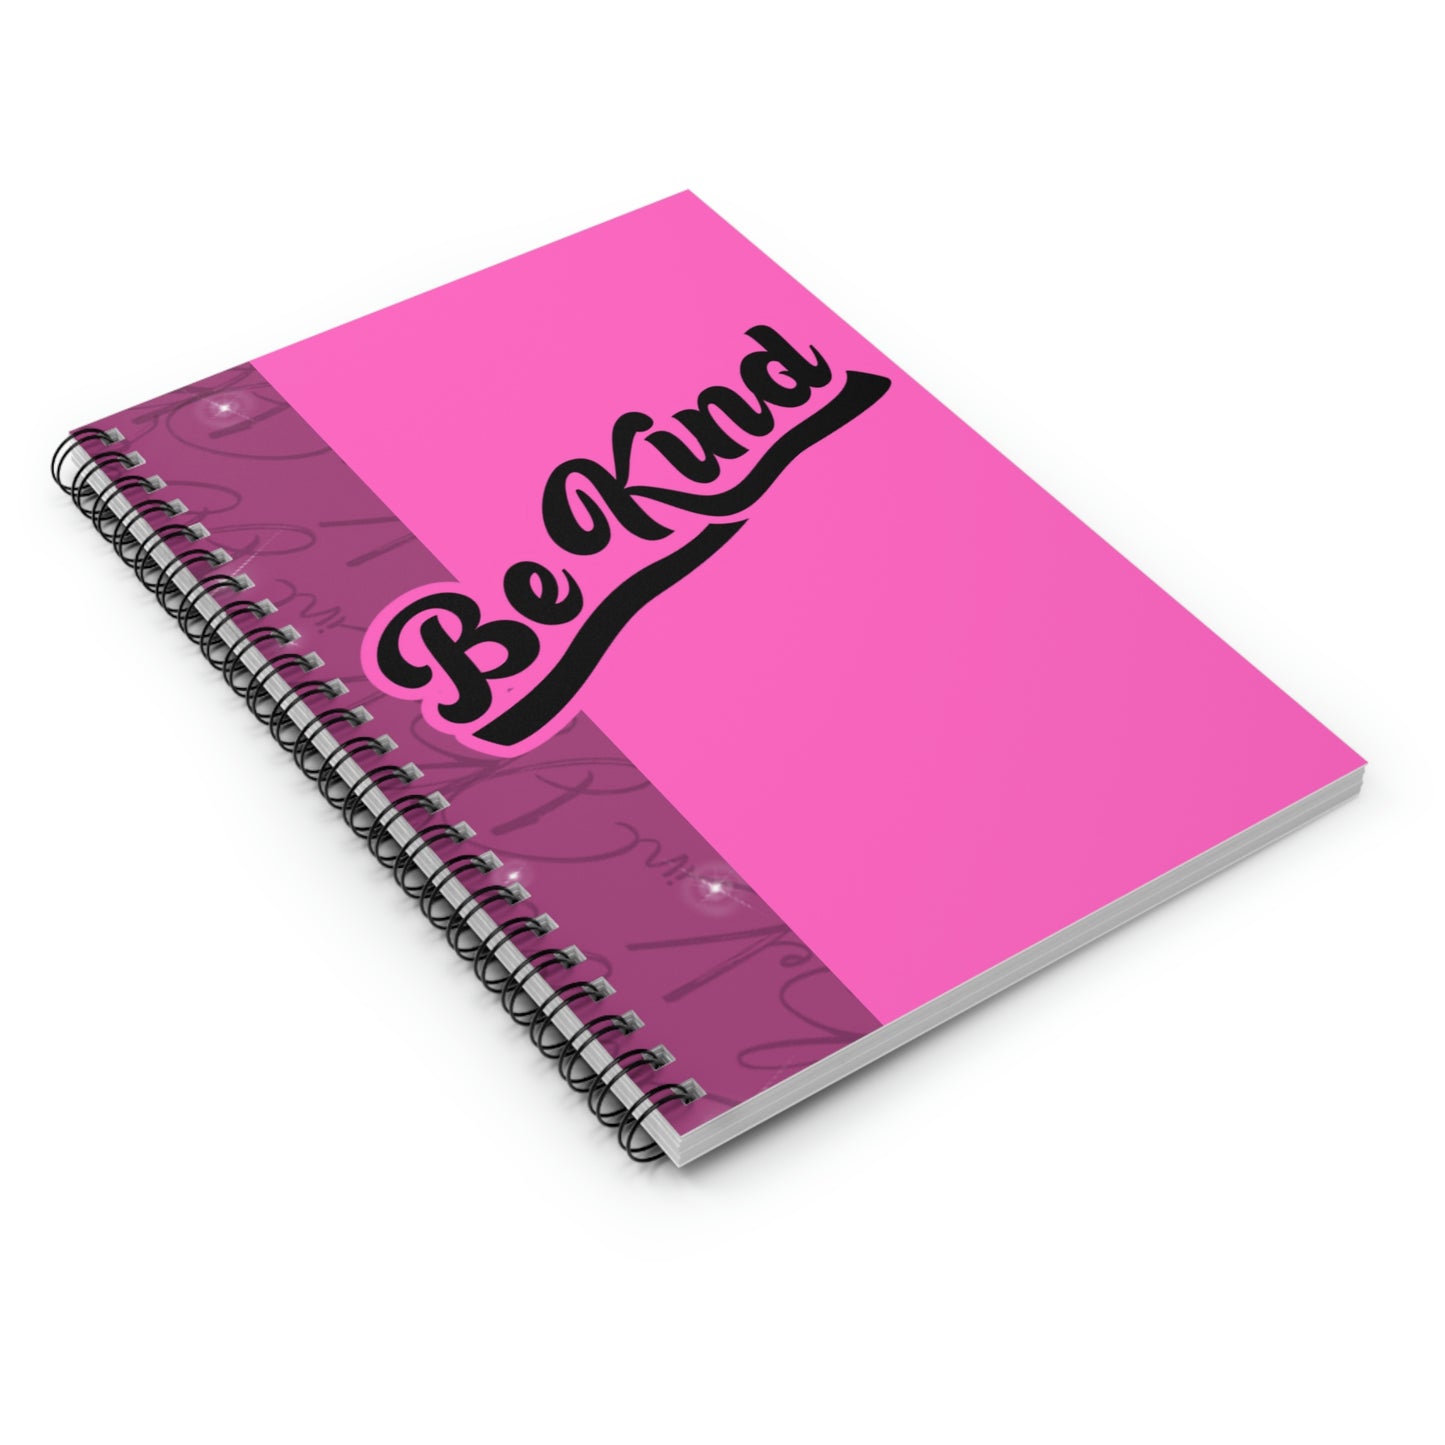 Be Kind Pink Spiral Notebook - Ruled Line